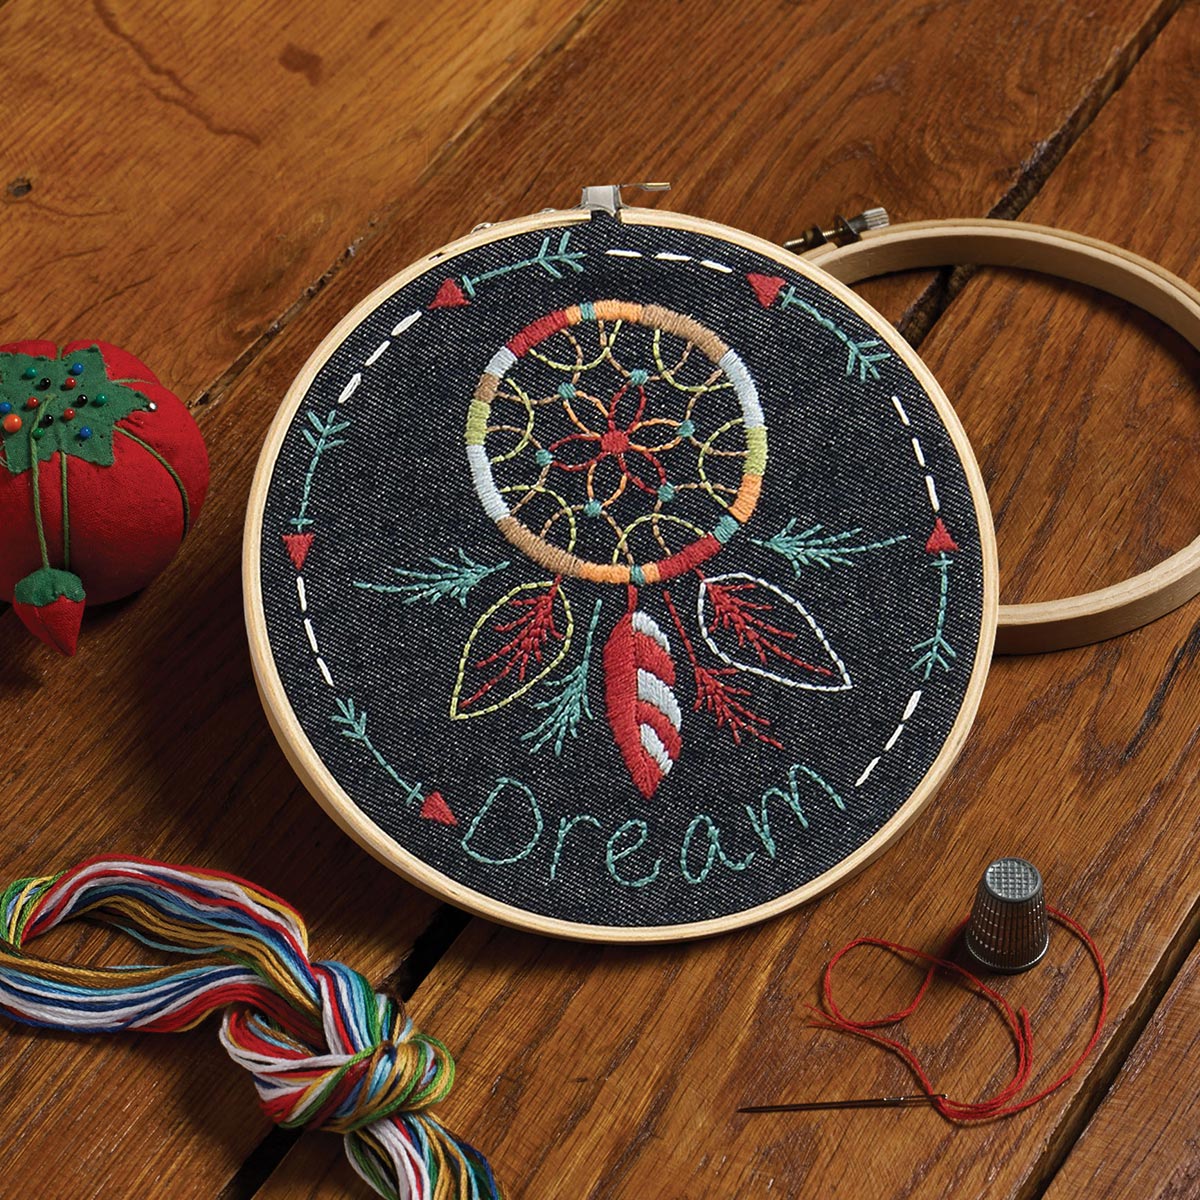 Bucilla ® Stamped Embroidery Handmade Charlotte™ - Denim Dream Catcher - 47654E